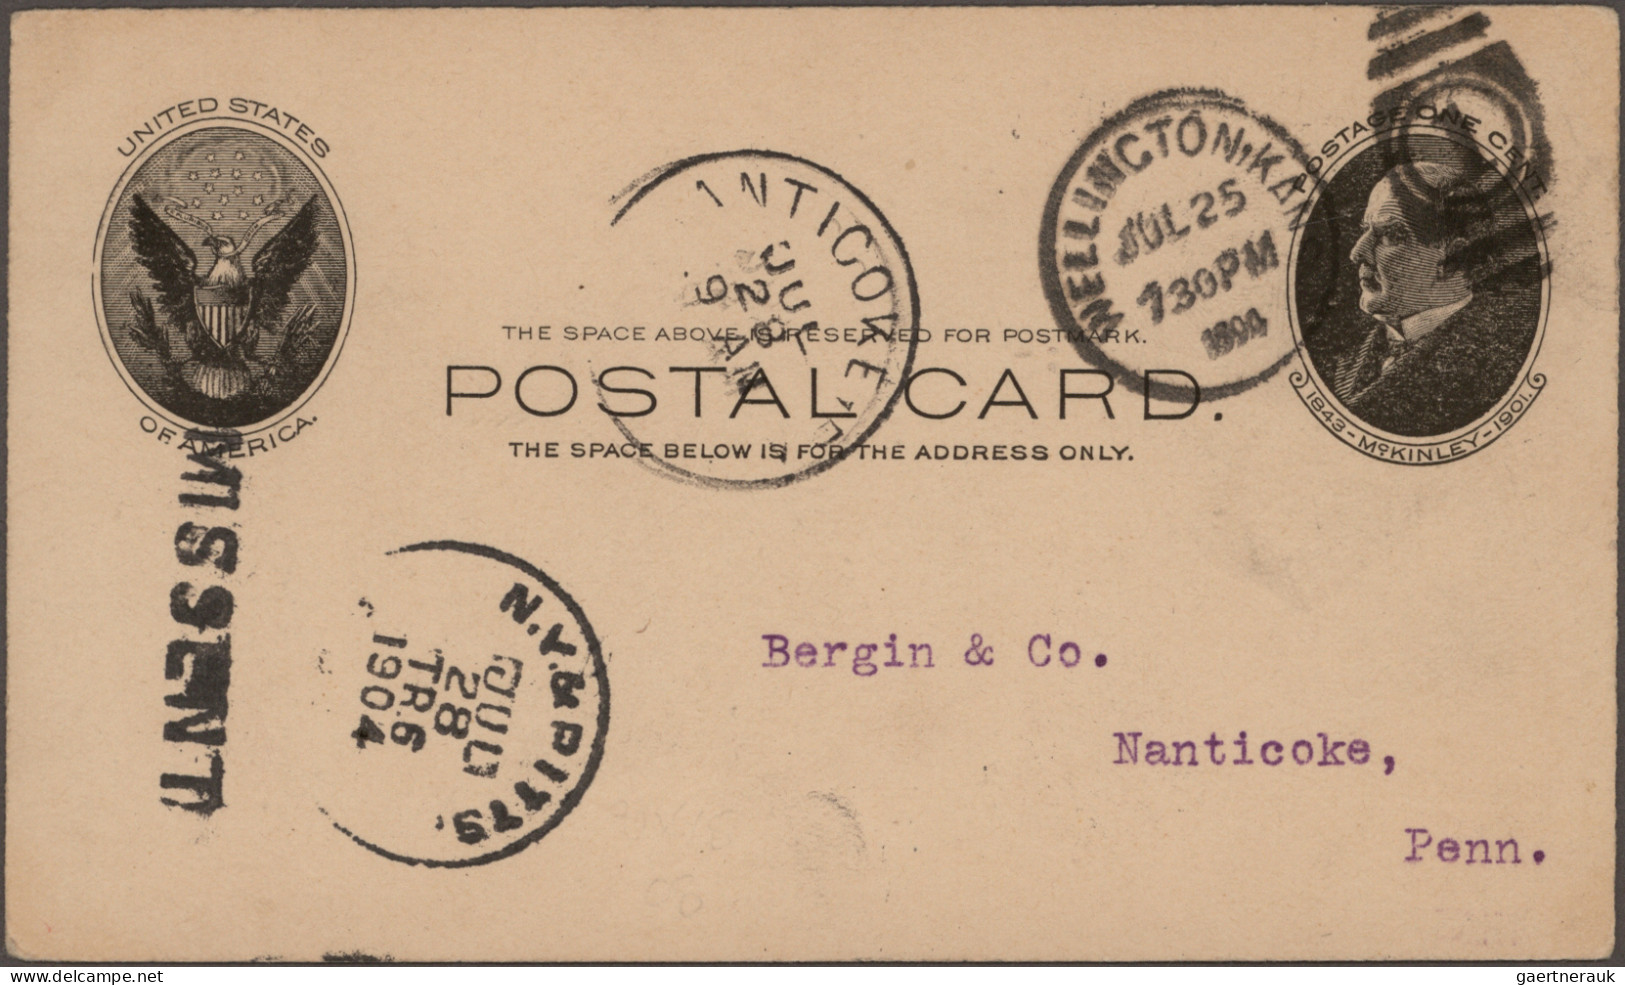 United States - Postal Stationary: 1882/1918, assortment of 28 mainly used stati